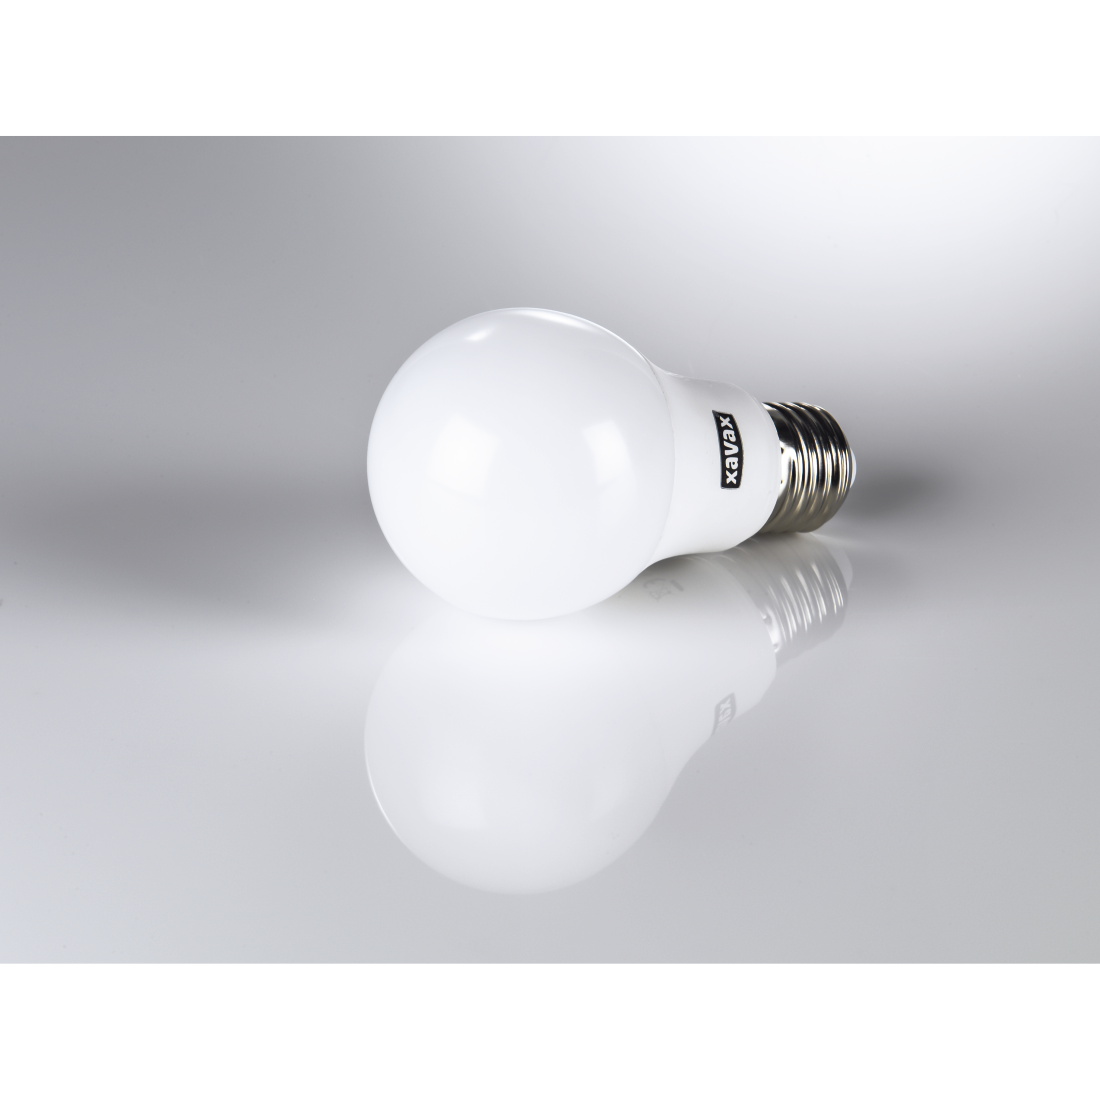 abx3 Druckfähige Abbildung 3 - Xavax, LED-Lampe, E27, 1055lm ersetzt 75W, Glühlampe, Warmweiß